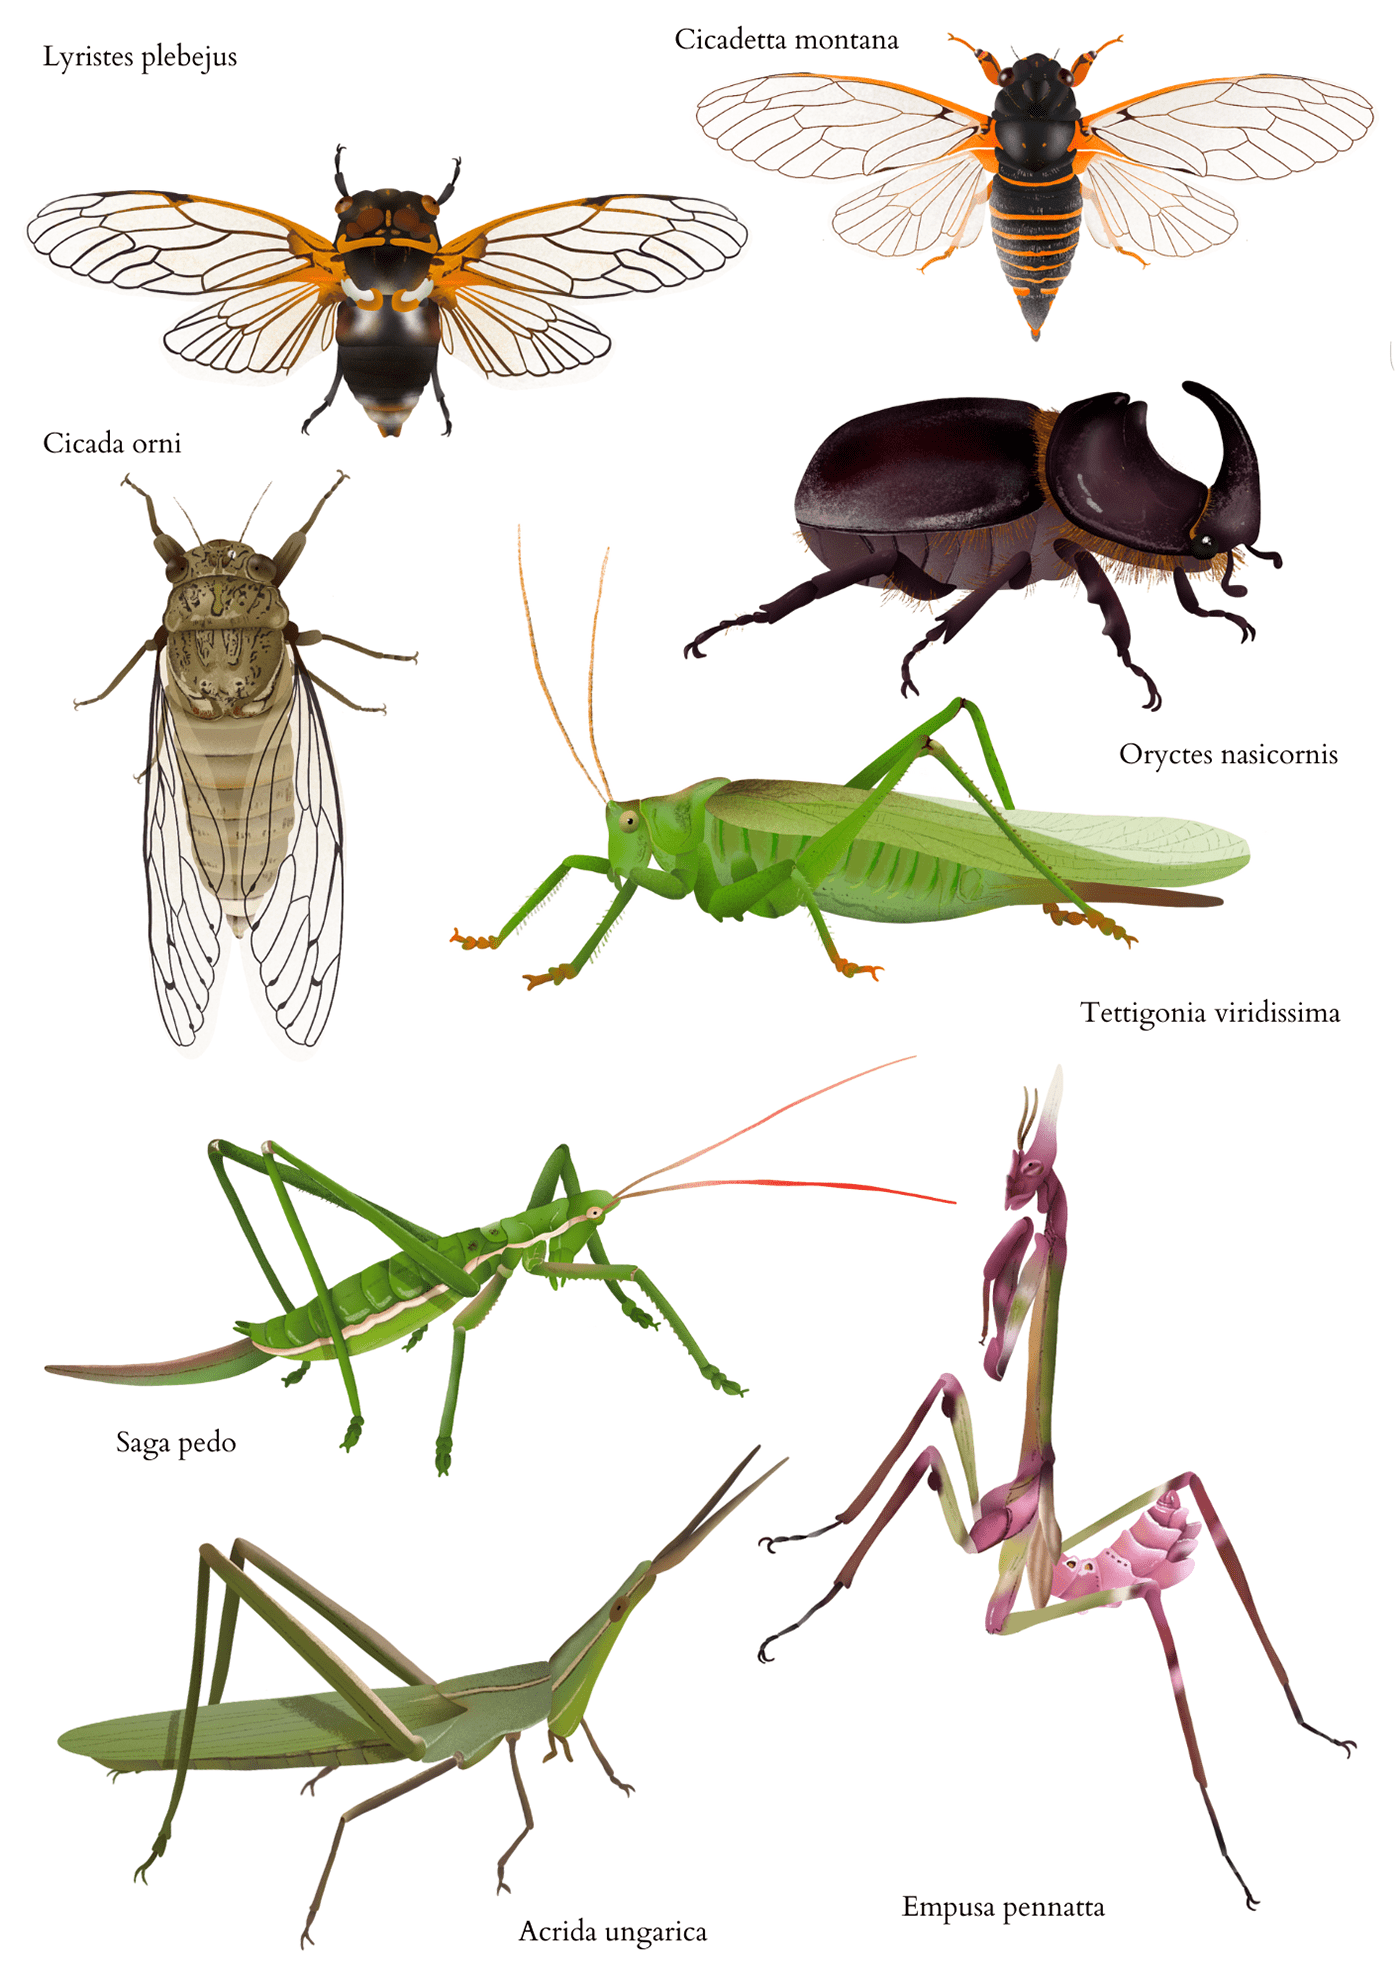 insecte insect invertebrate animals animal Arthropod Nature Ecology Arthropoda Invertebrates